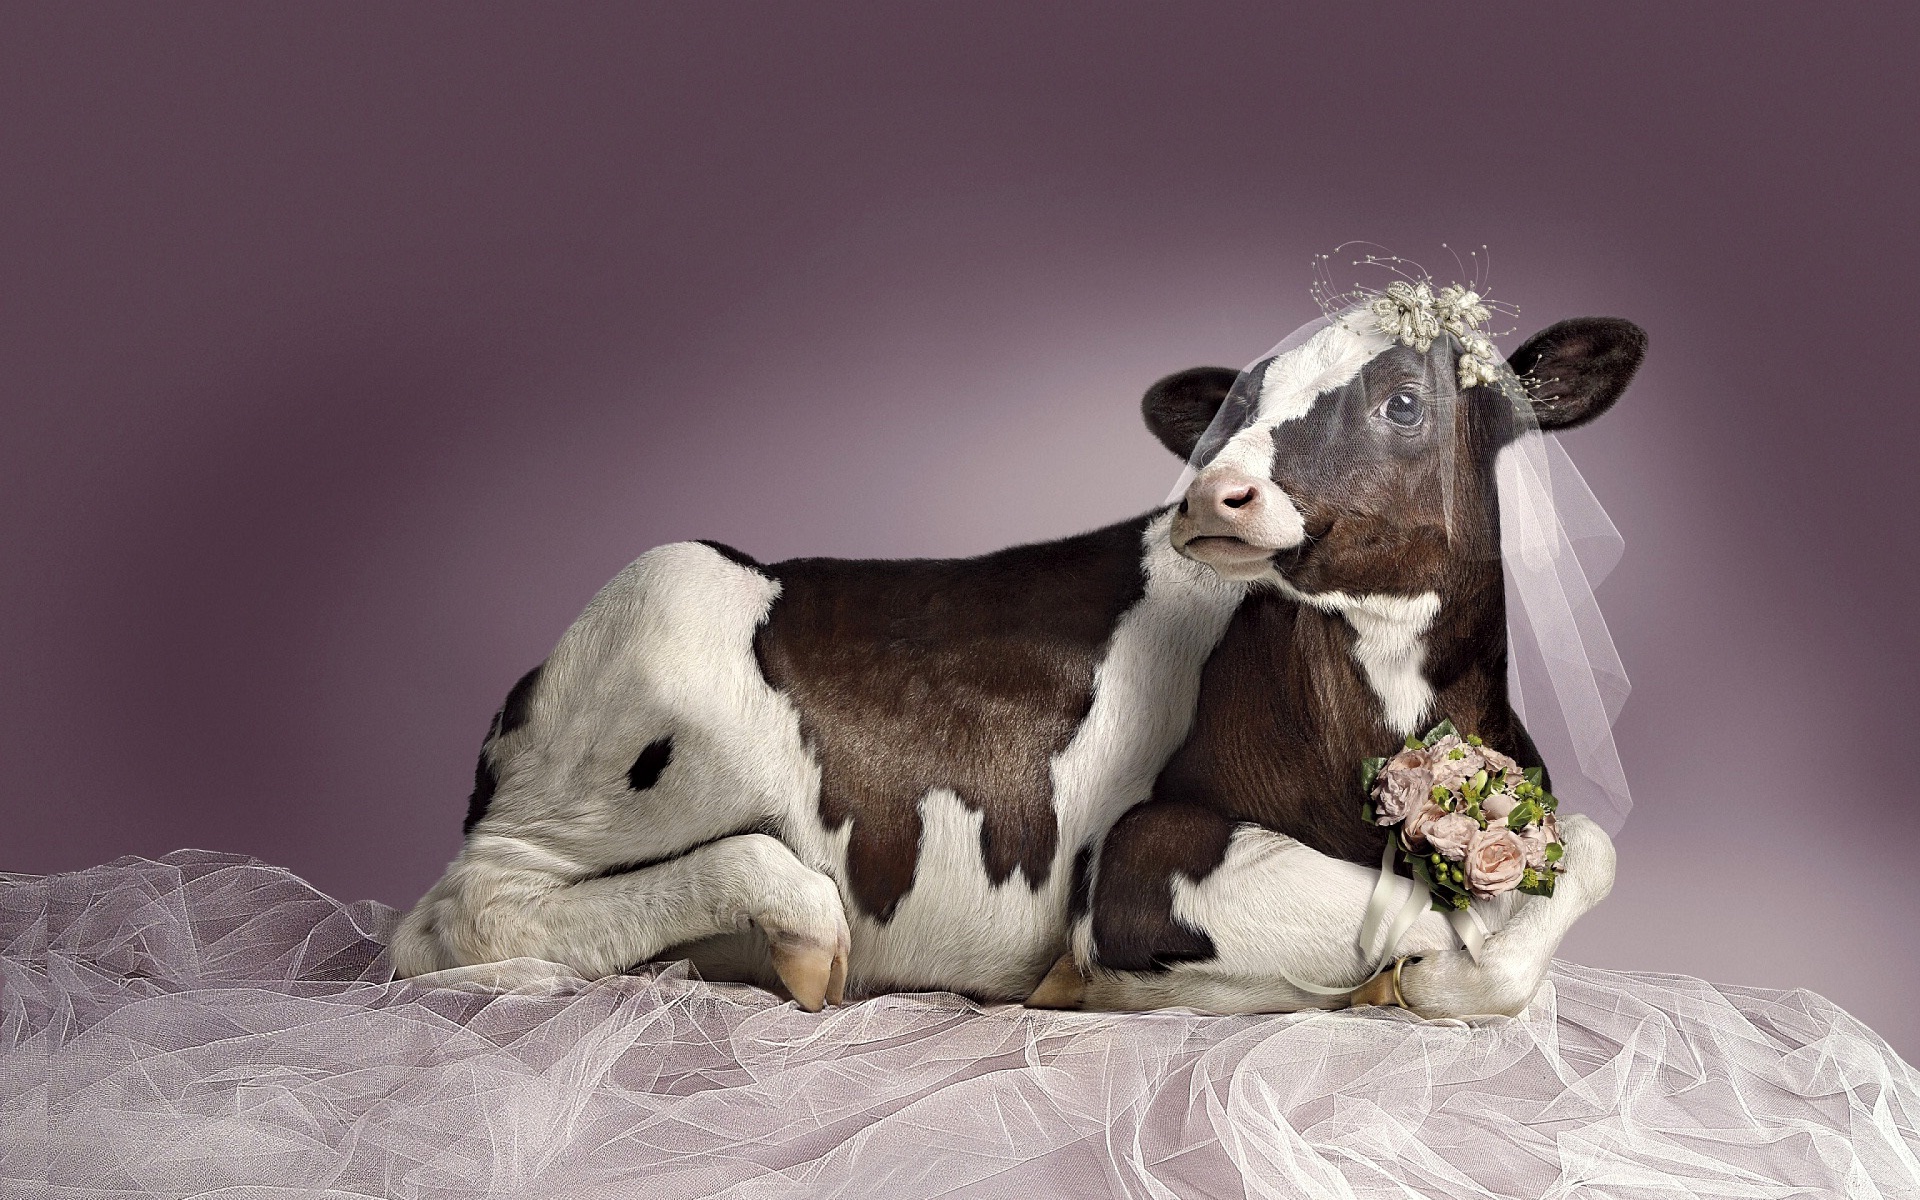 Bridal Cow Funny Wallpaper And Image HD Rocks